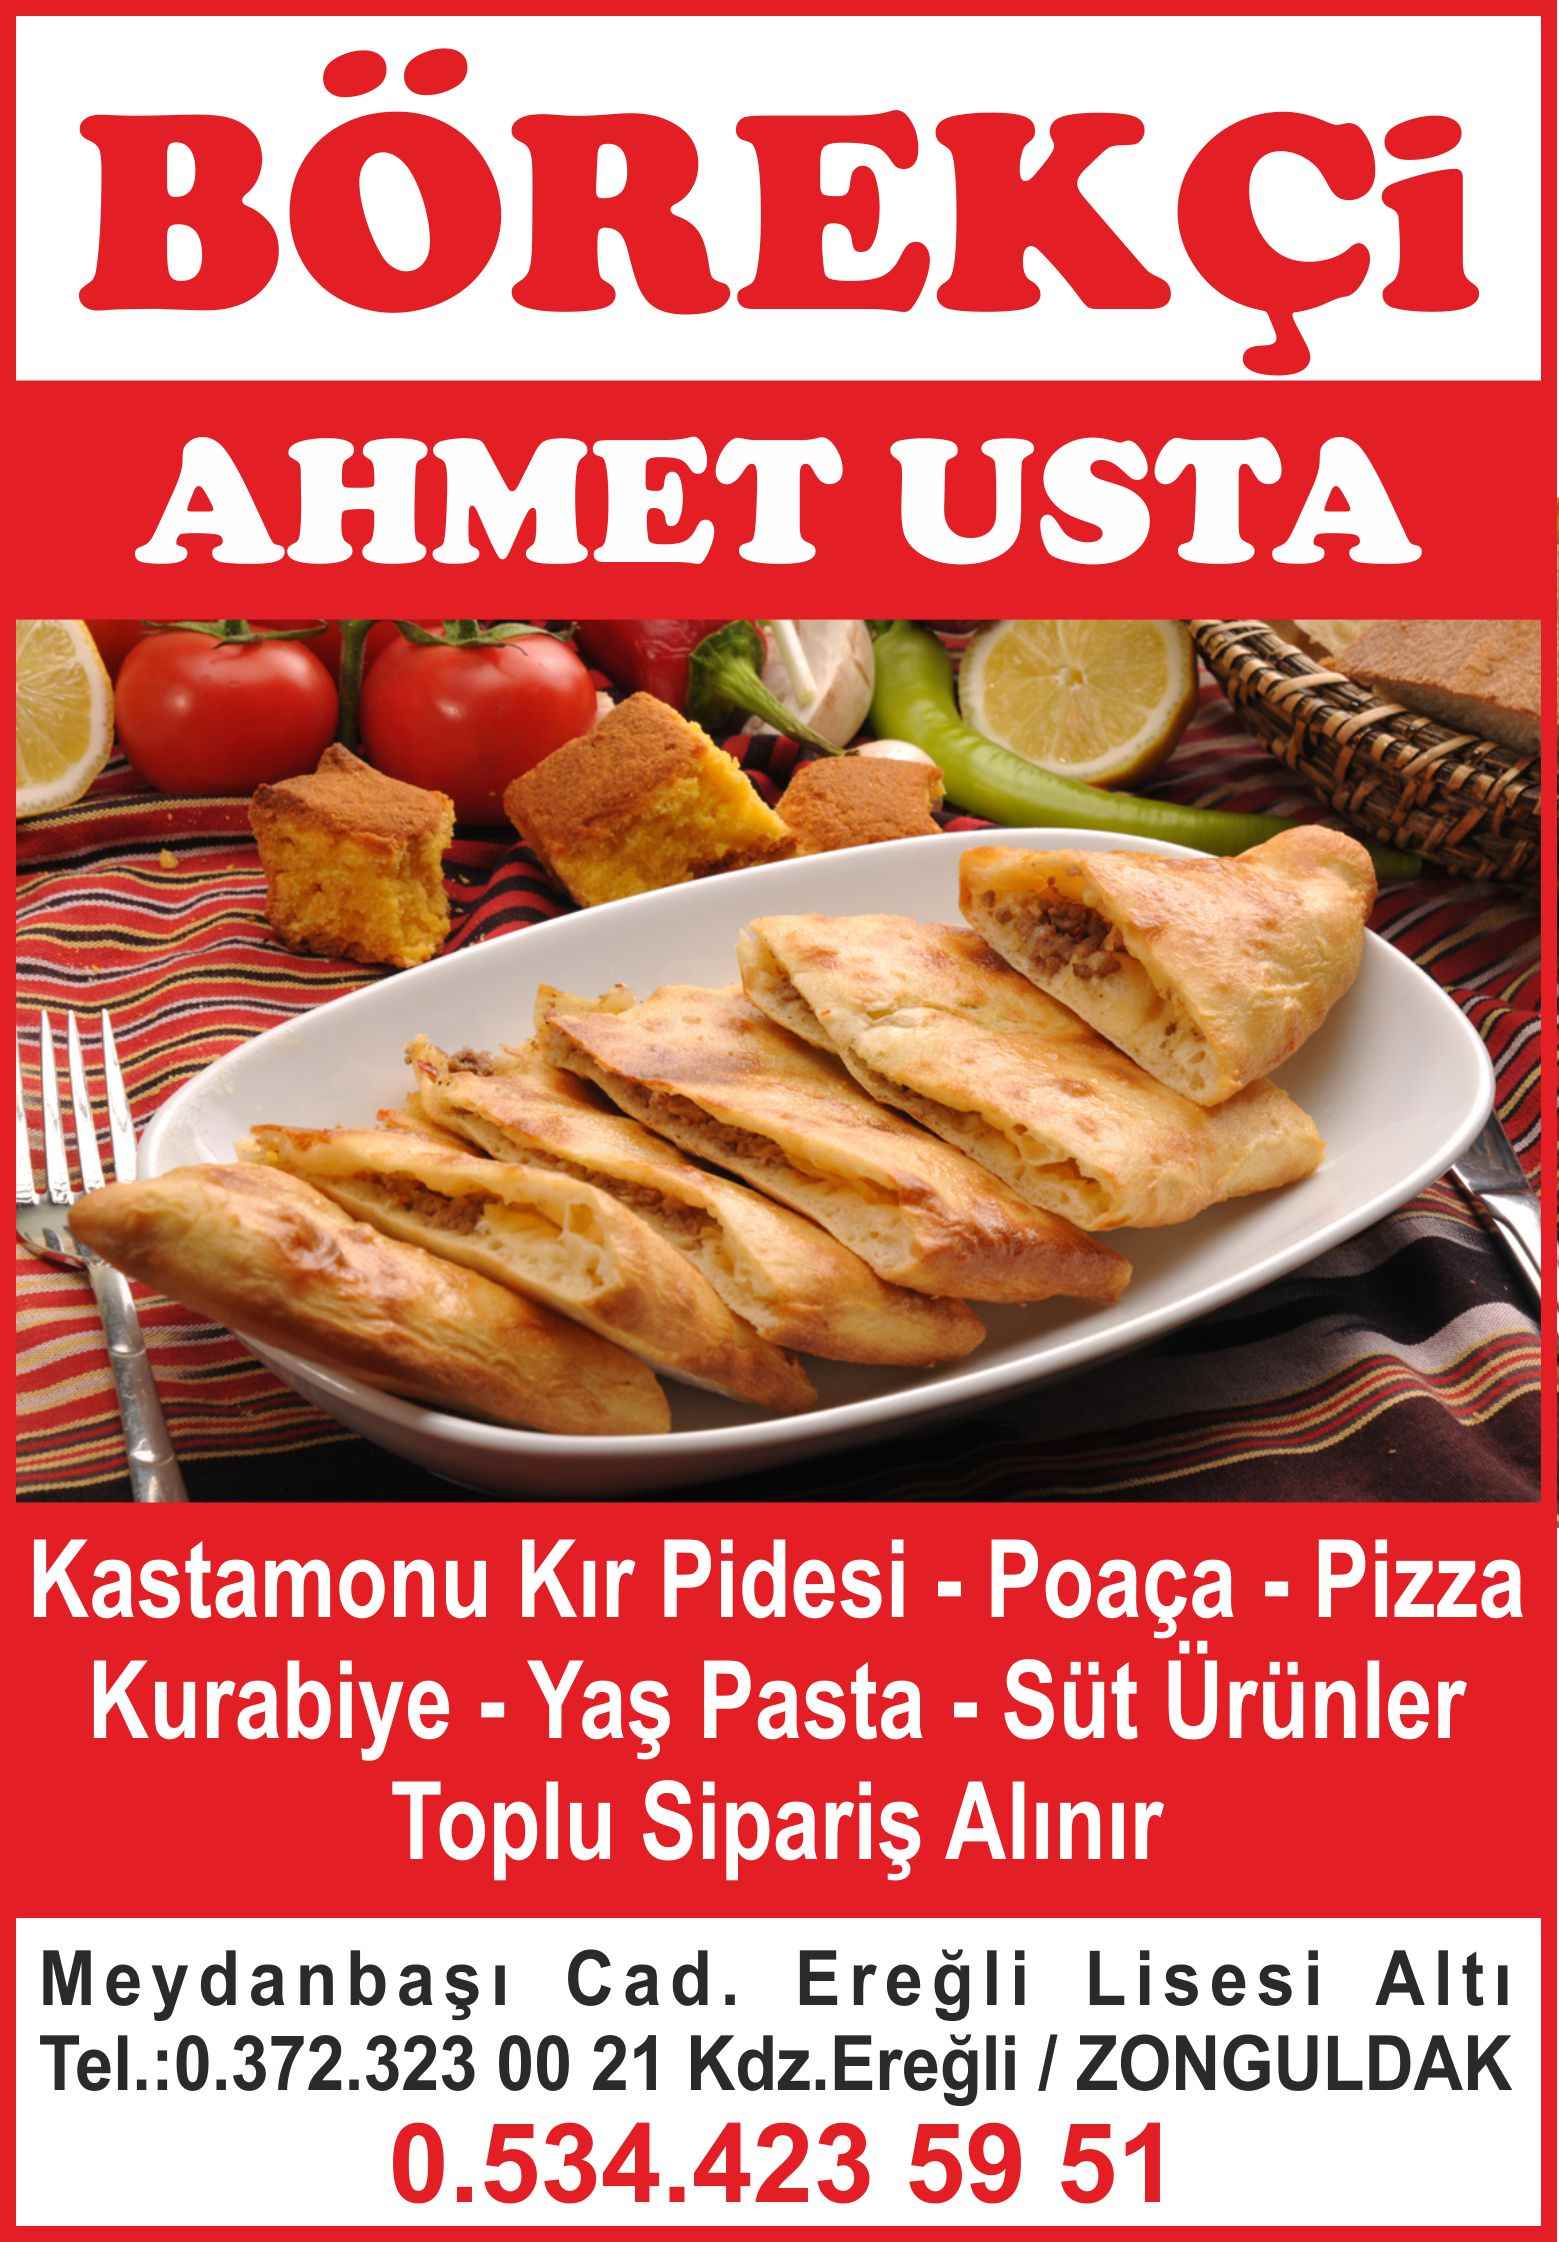 Börekci Ahmet Usta Kdz.Ereğli